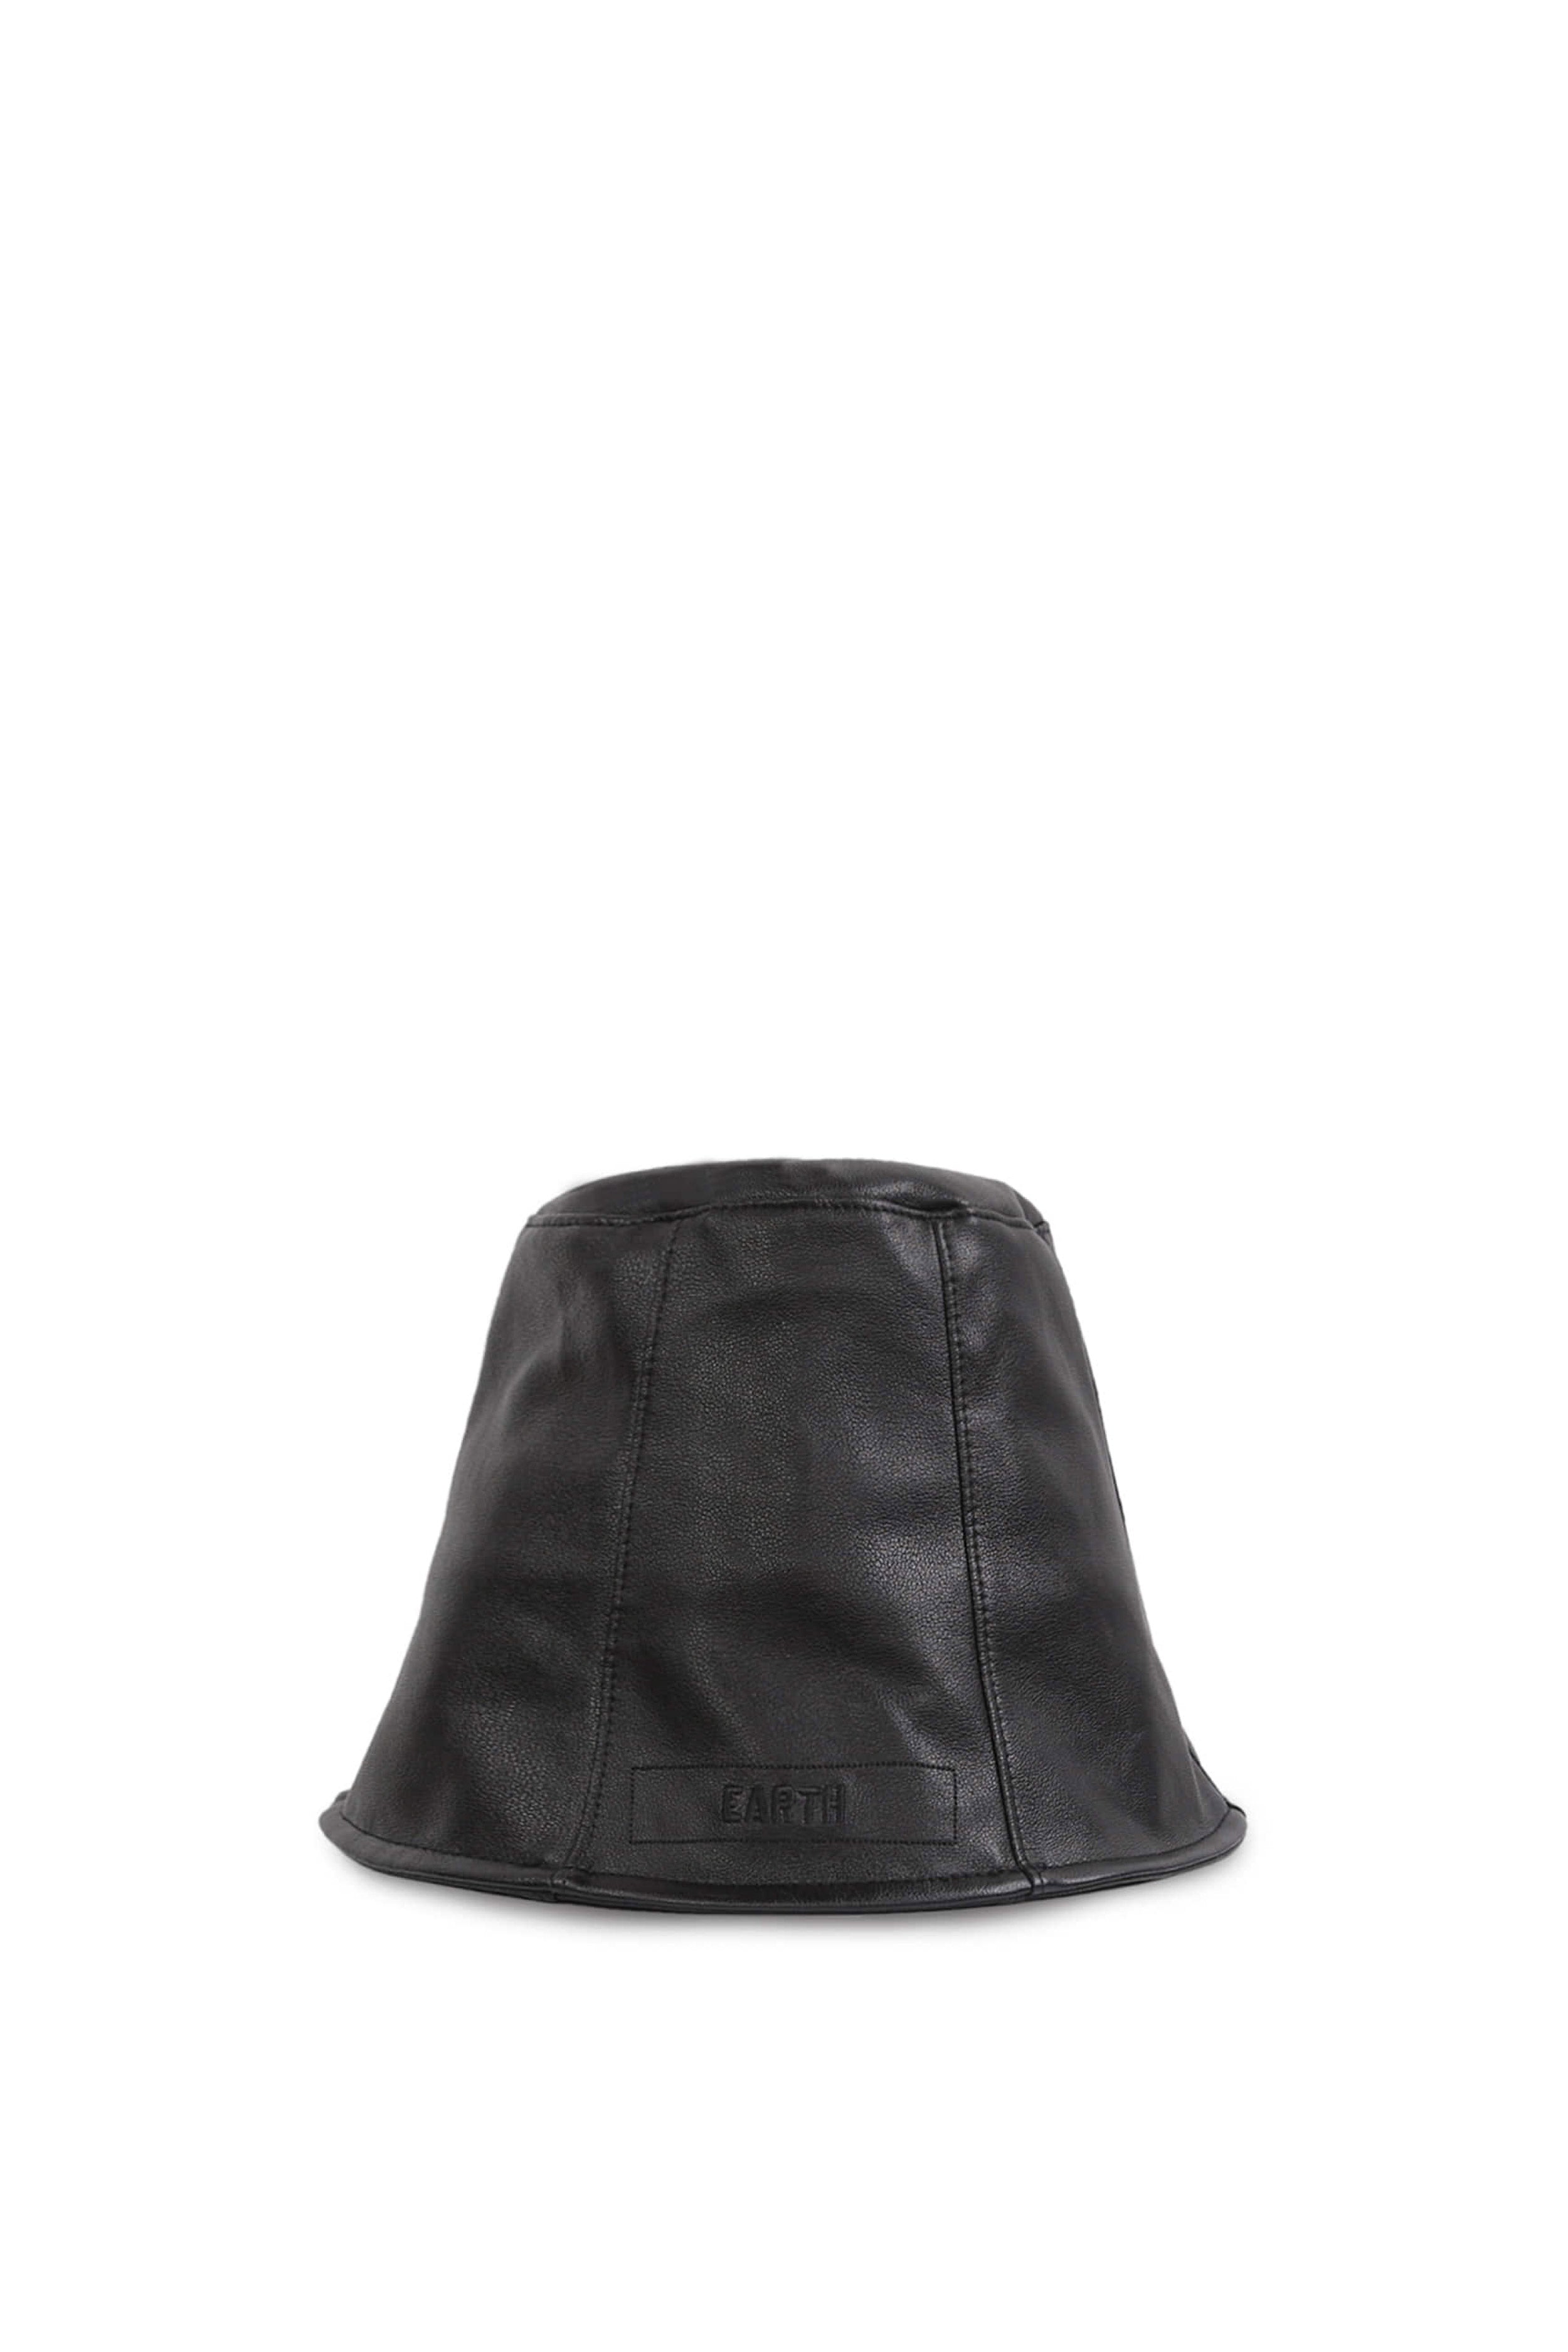 Badblood Leather Bucket Hat Black